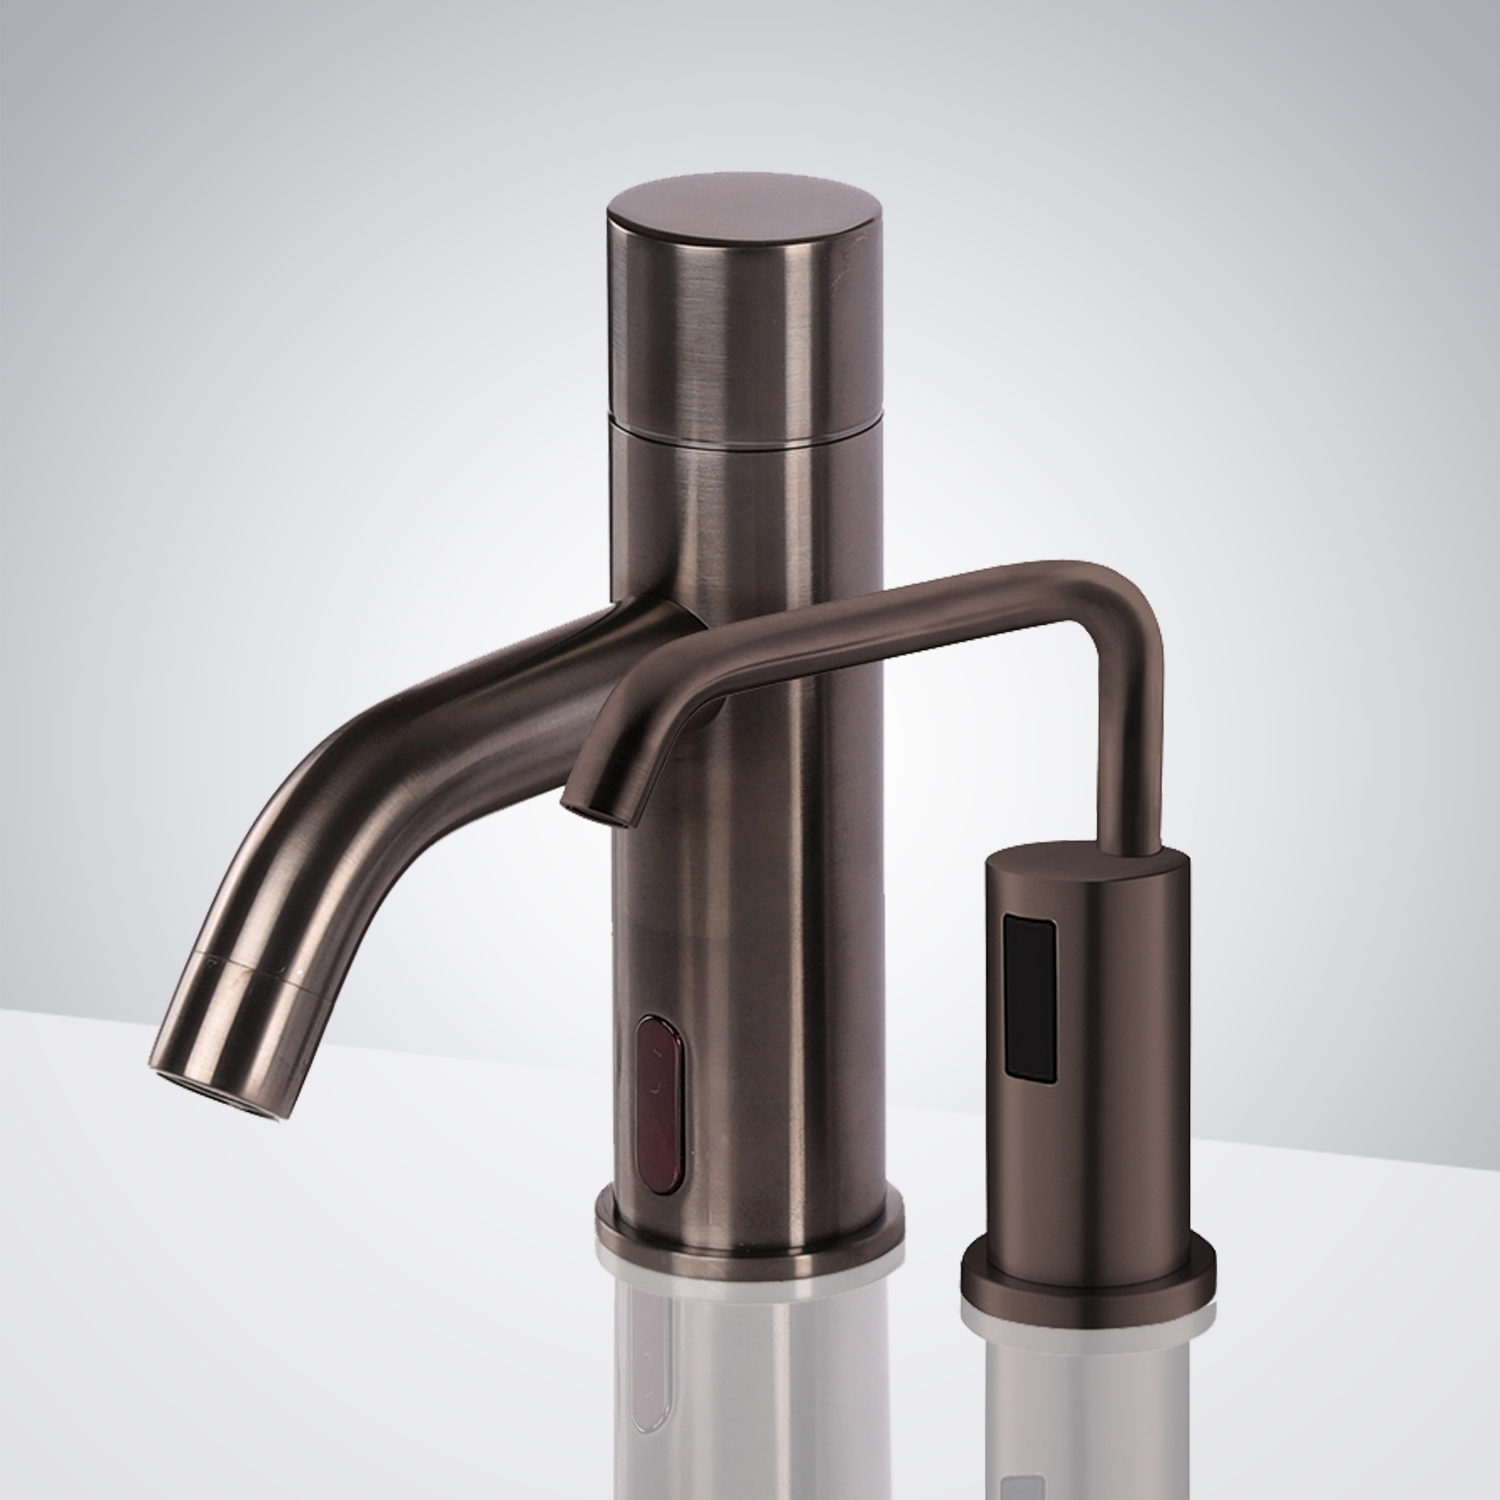 Fontana Dijon in Light Oil Rubbed Bronze Commercial Motion Sensor Faucet & Automatic Liquid Foam Soap Dispenser for Restrooms